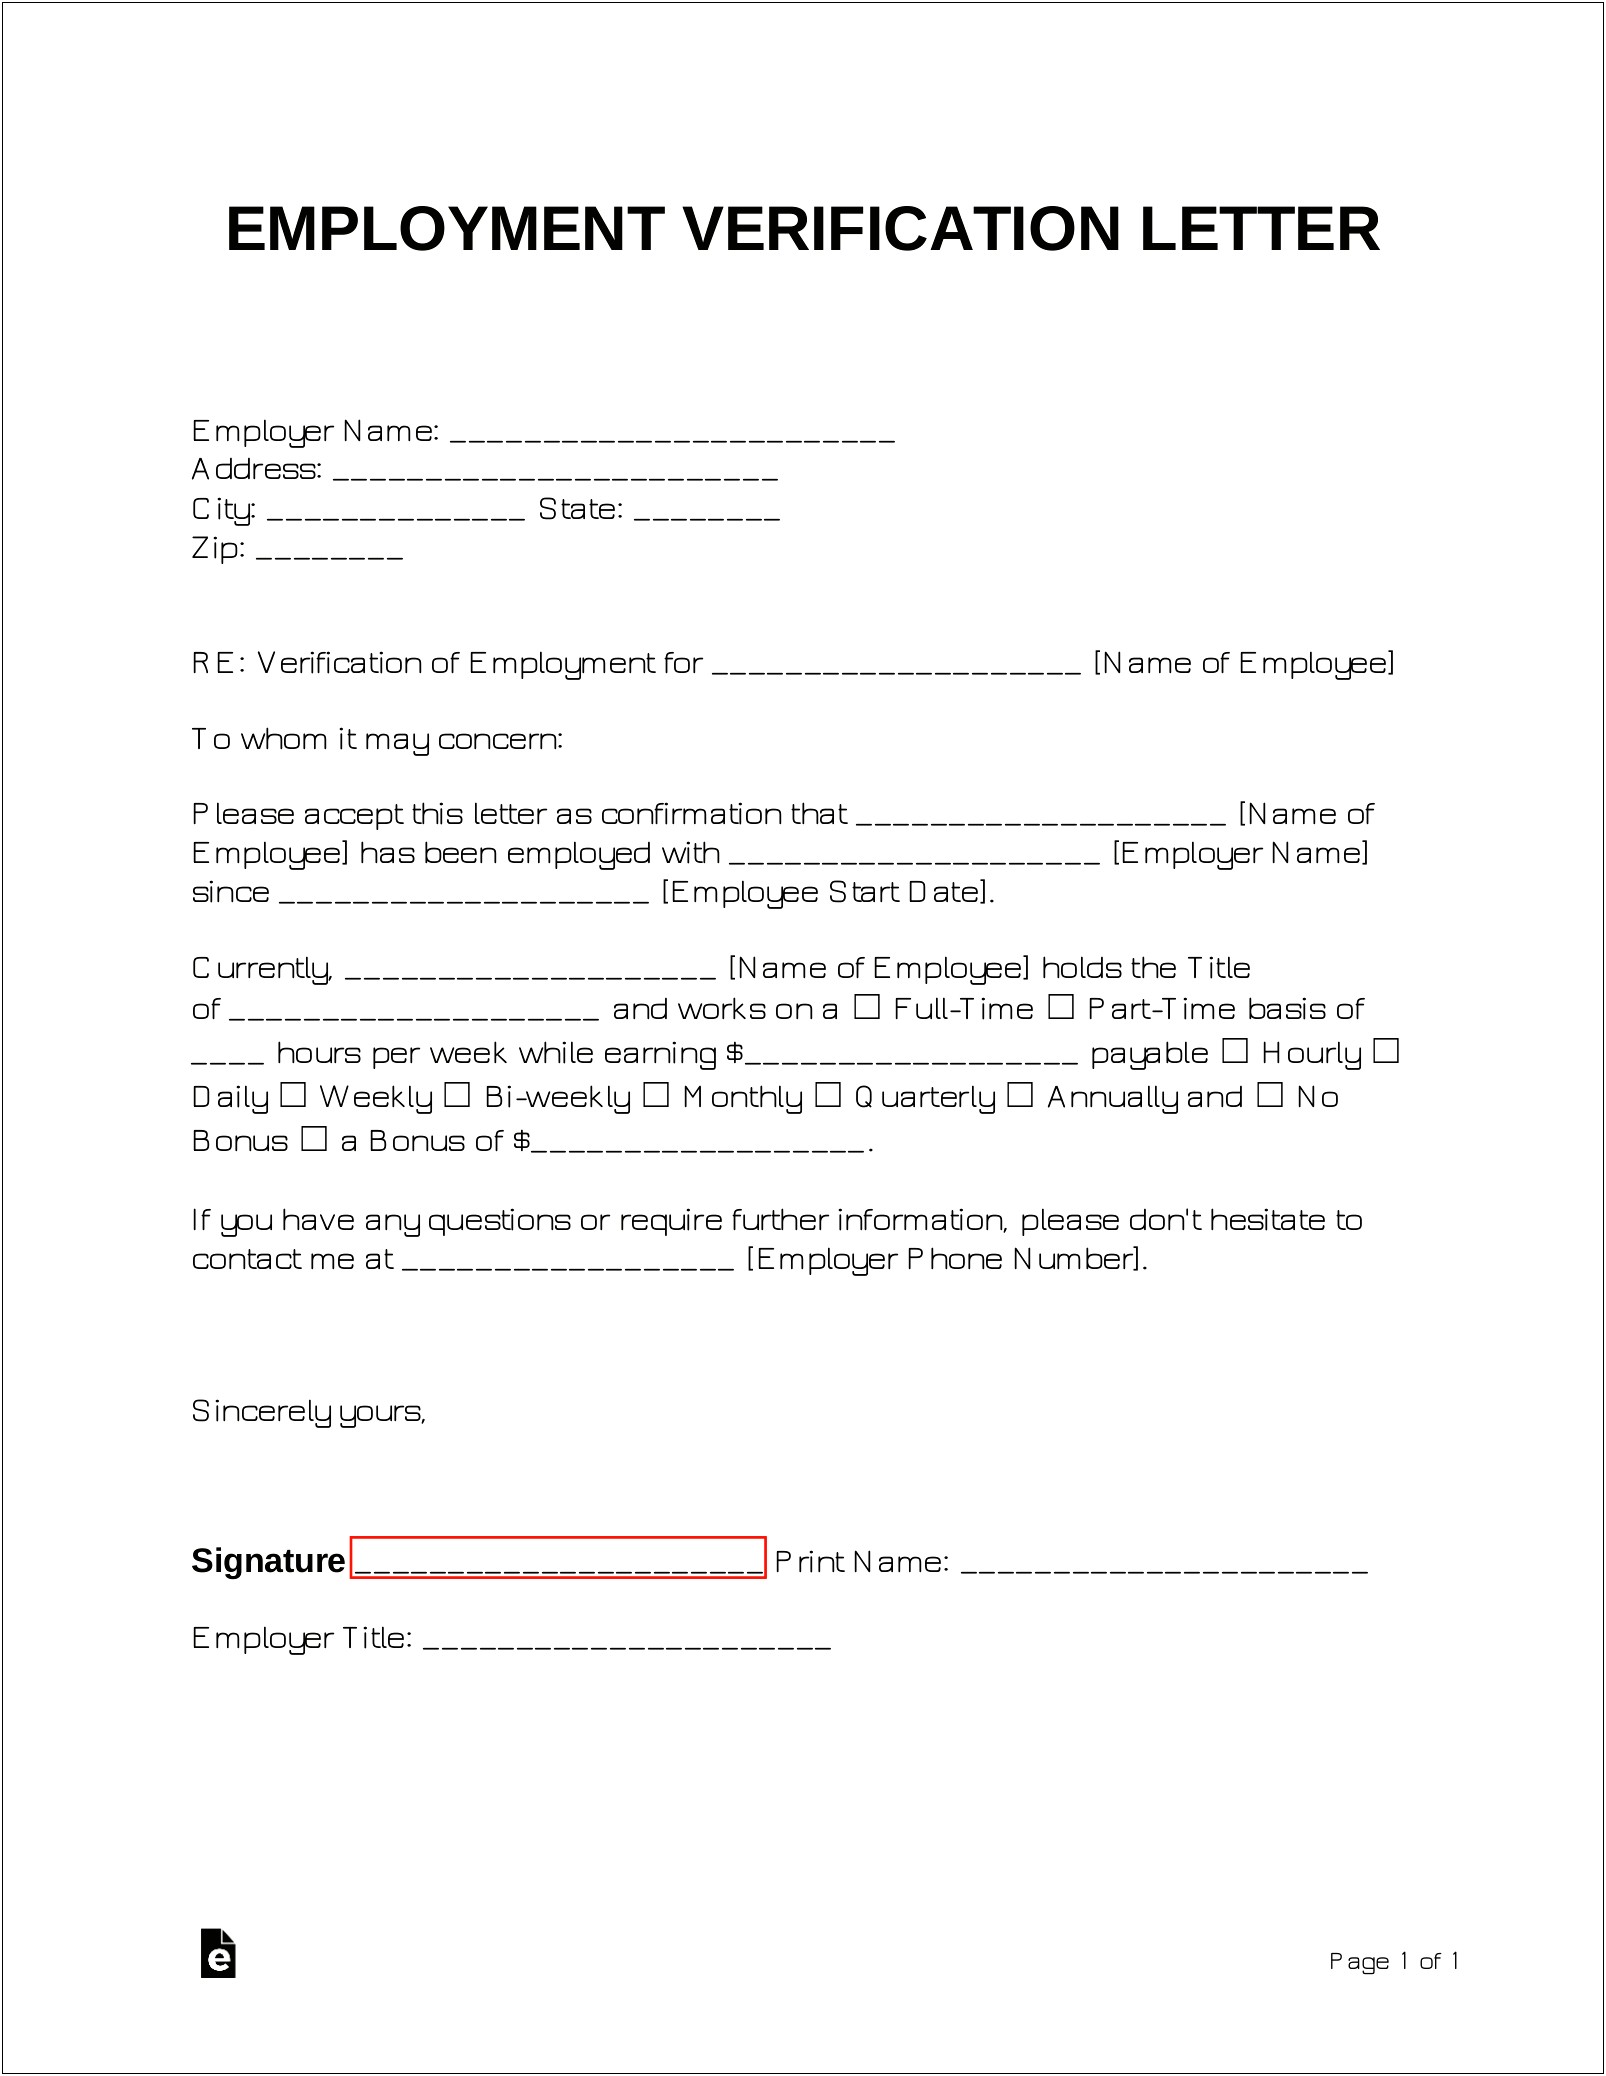 Requesrt Employment Verification Letter Template Word